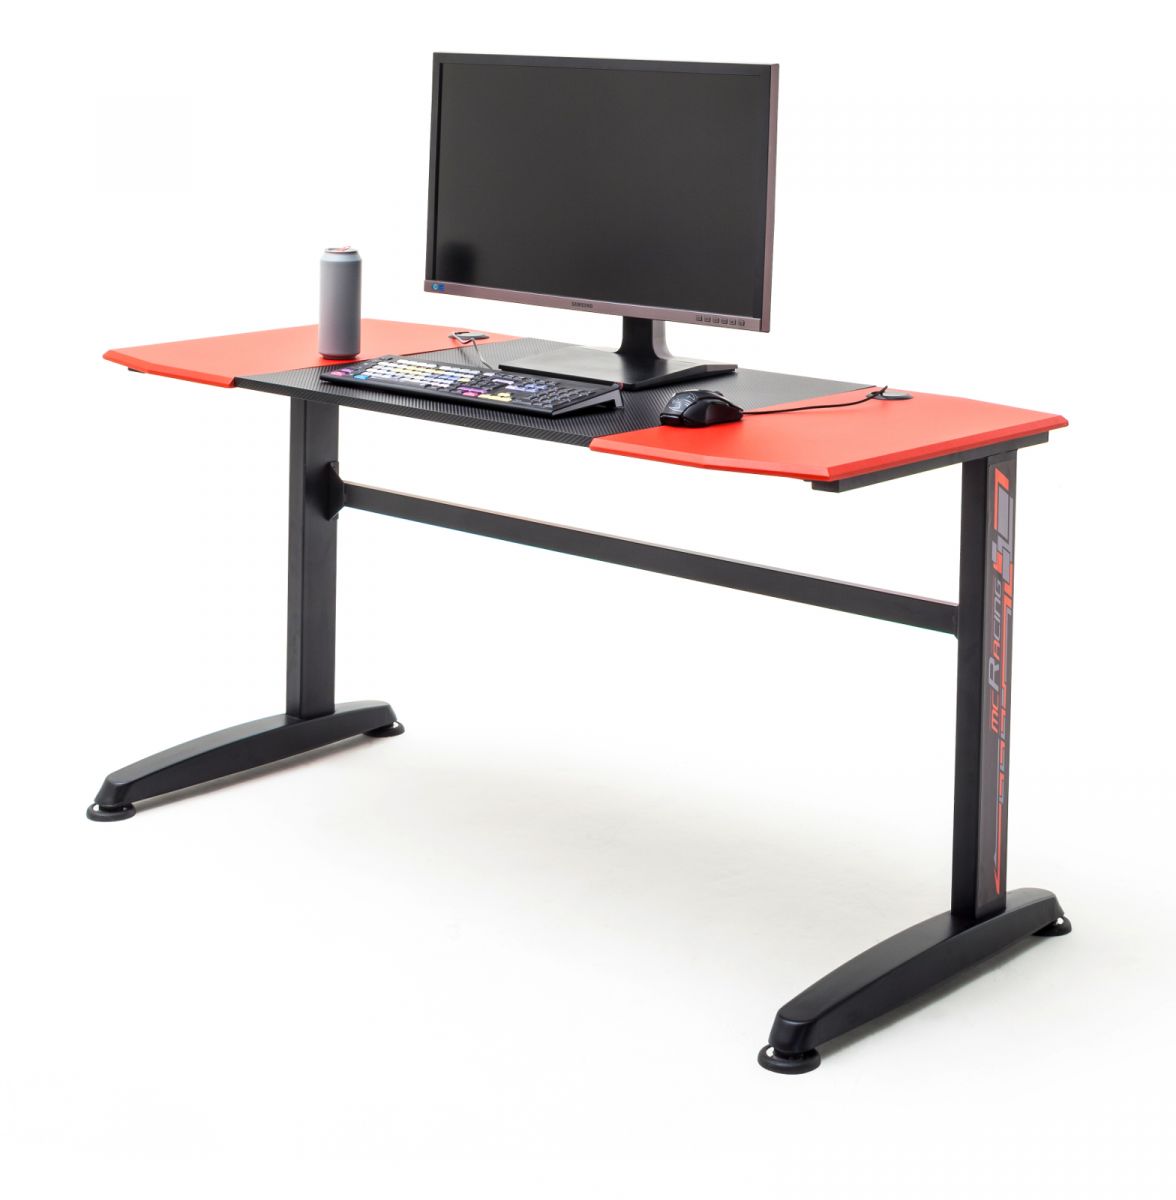 Gamingtisch mcRacing in schwarz und rot Computertisch 140 x 65 cm Gaming Desk